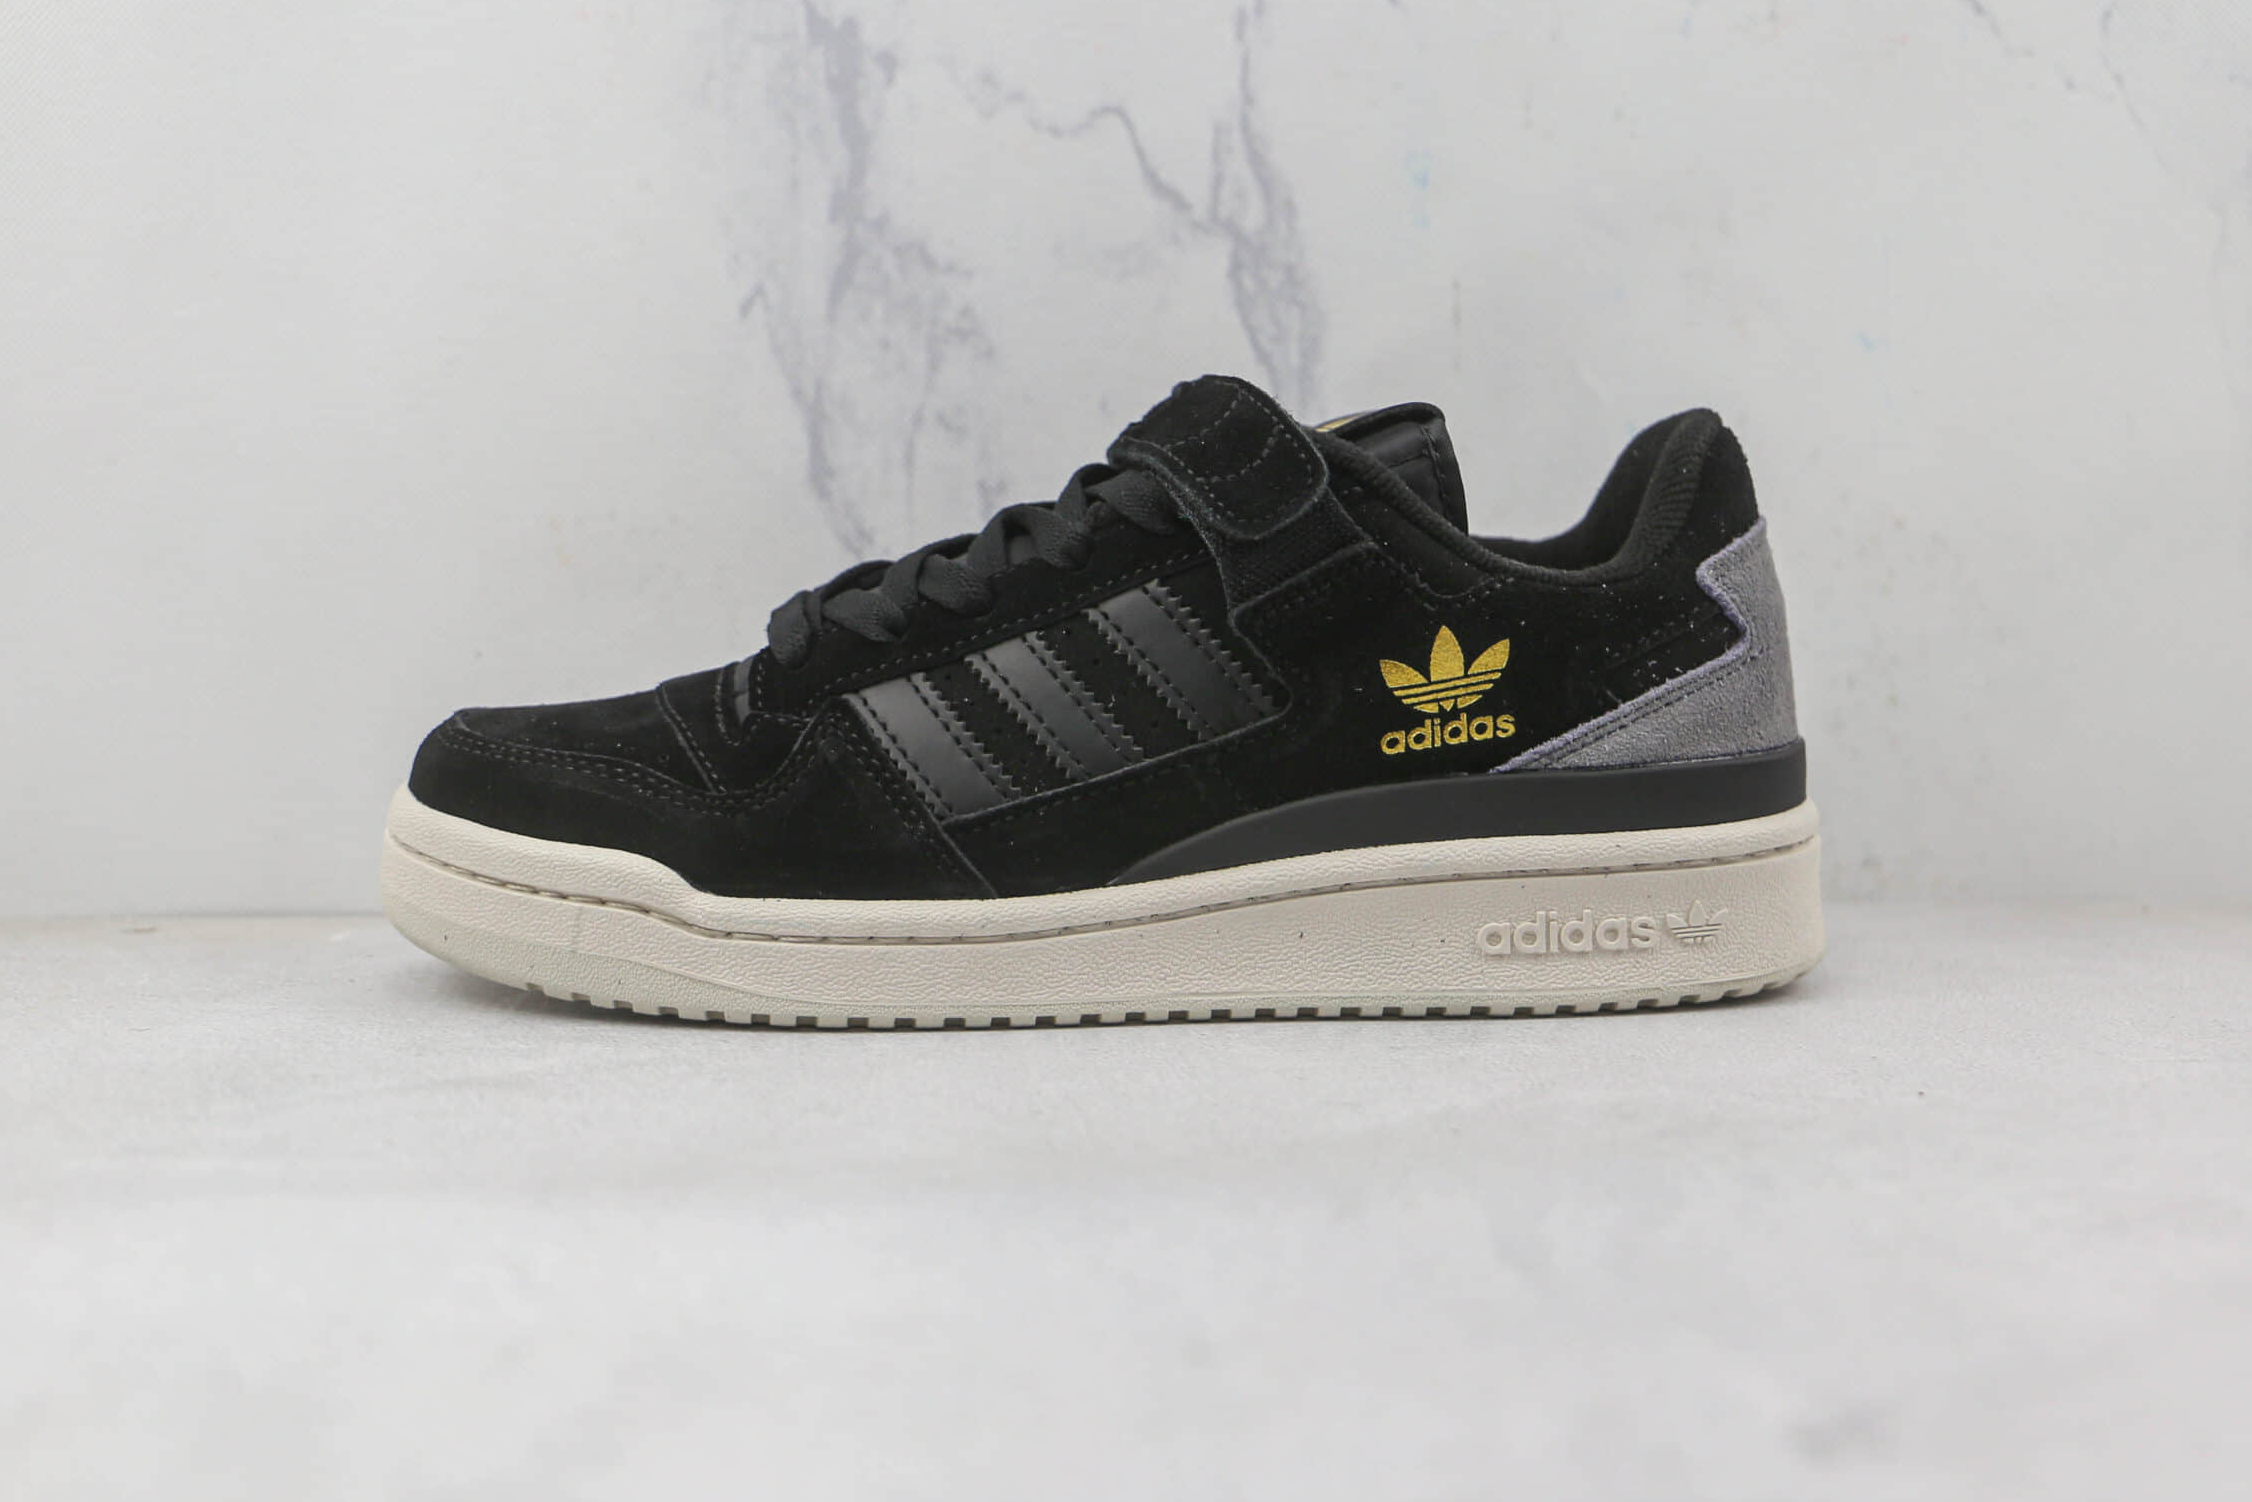 Adidas Forum 84 Low Black White Shoes - Classic Retro Style | Free Shipping